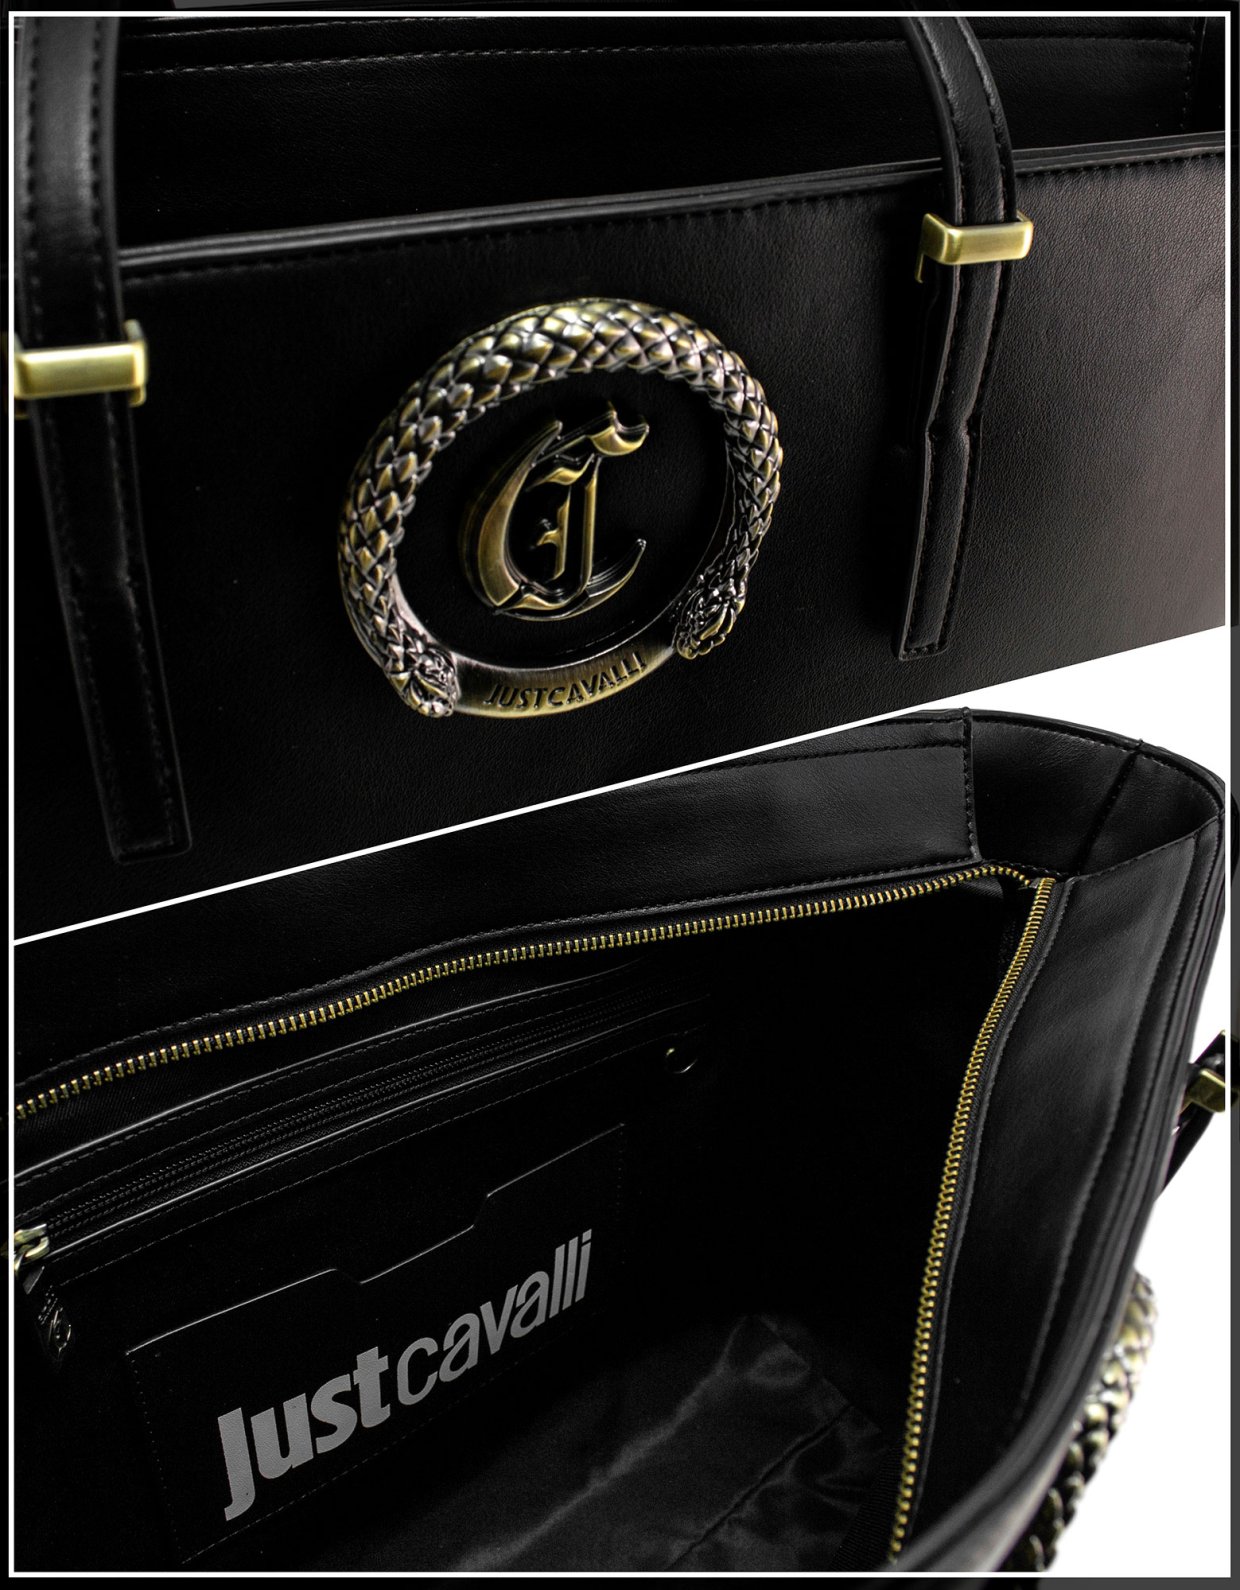 Just Cavalli Range new metal tote bag black